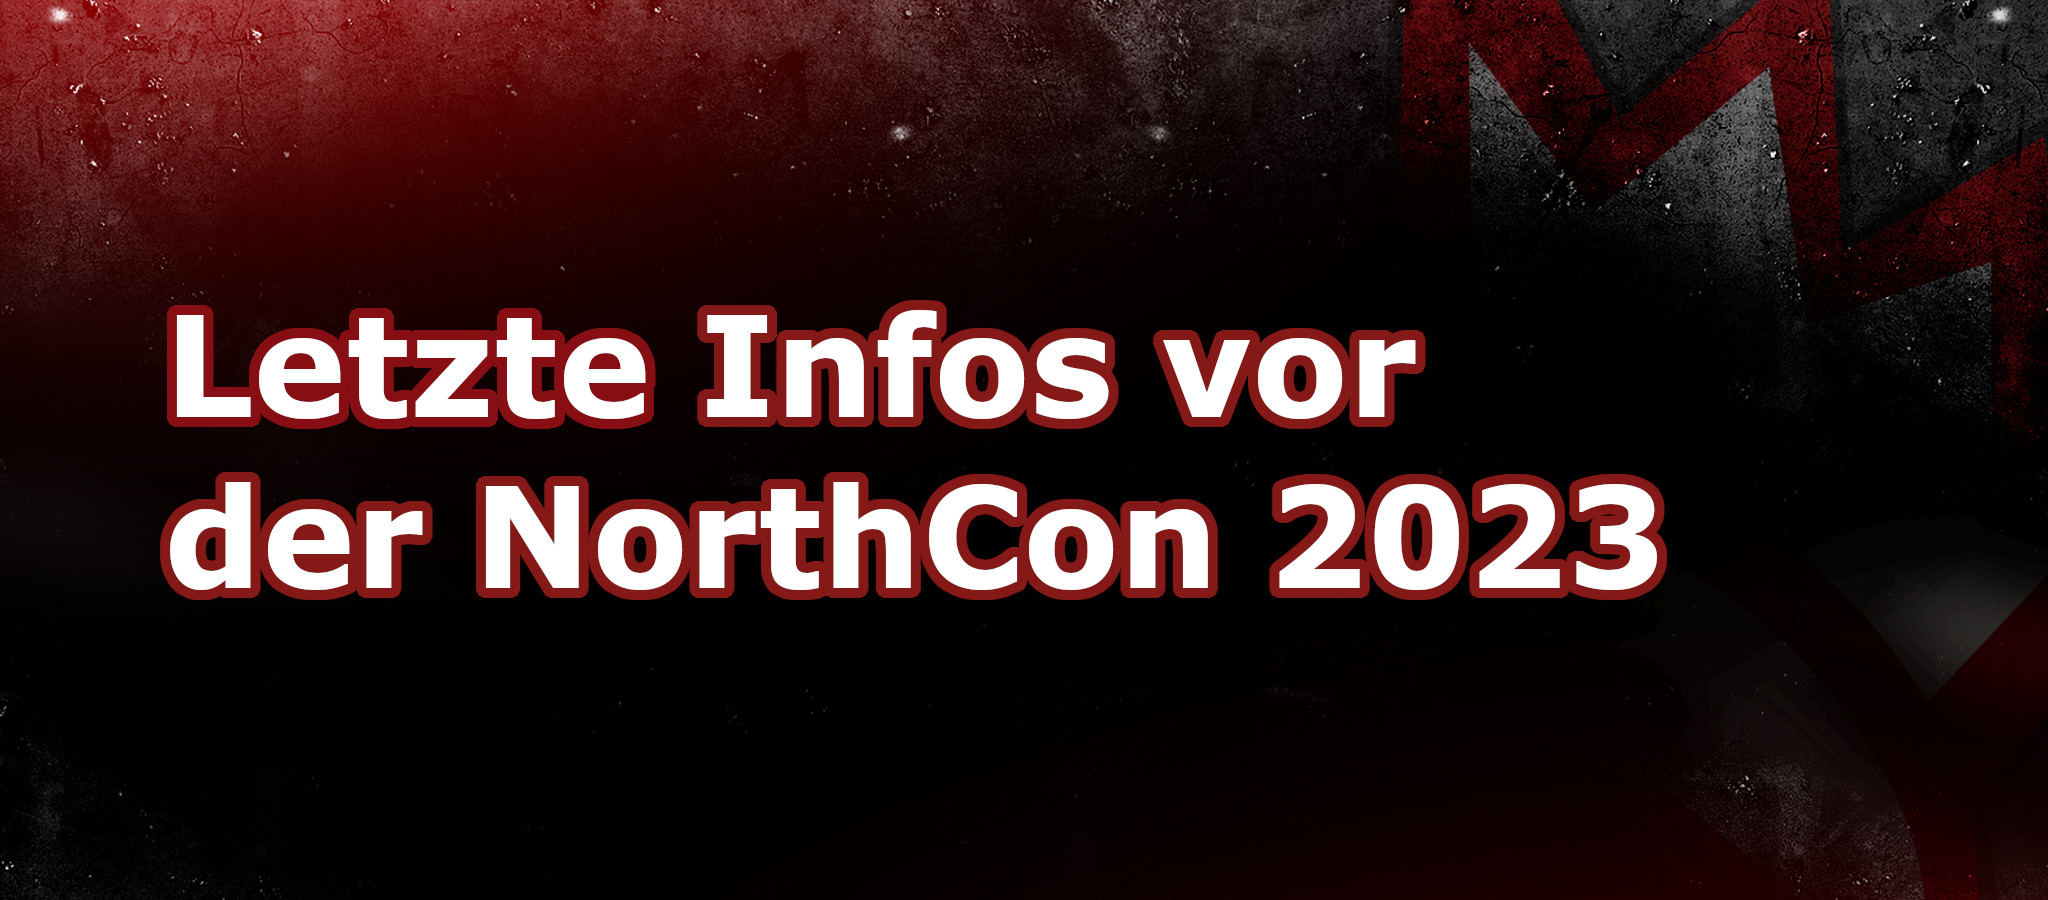 NorthCon 2023 last news